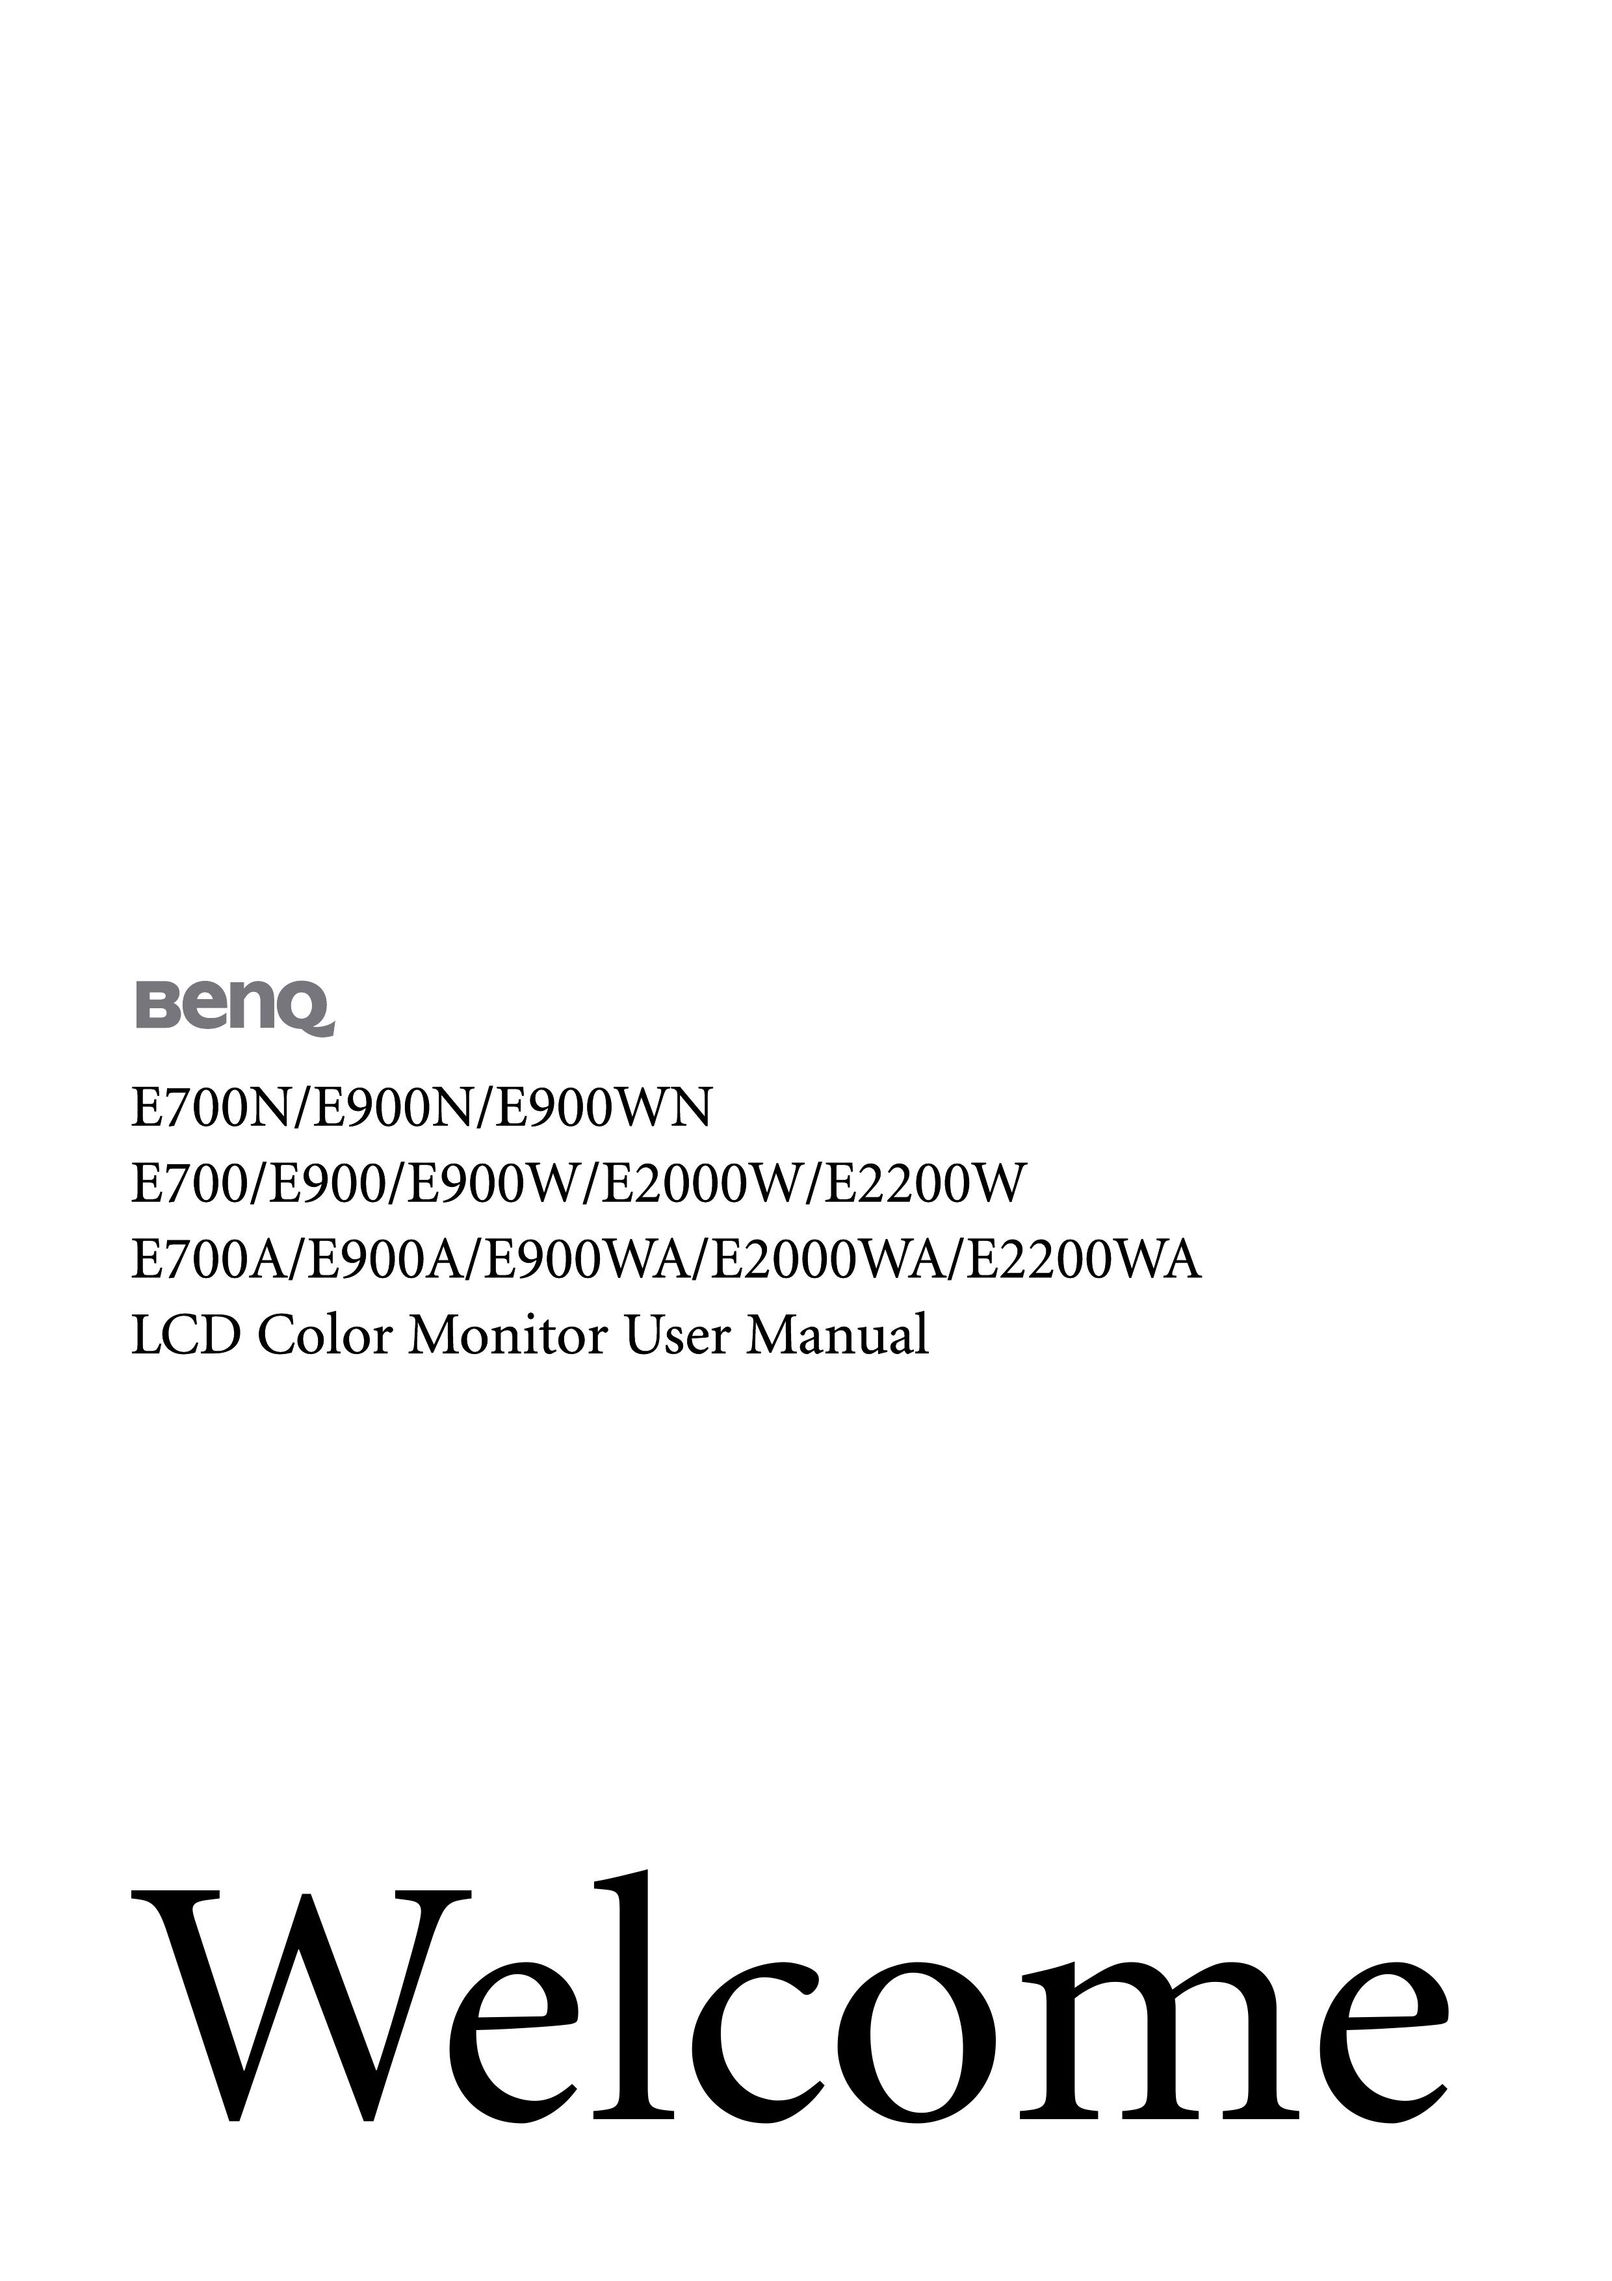 BenQ E900W Computer Monitor User Manual